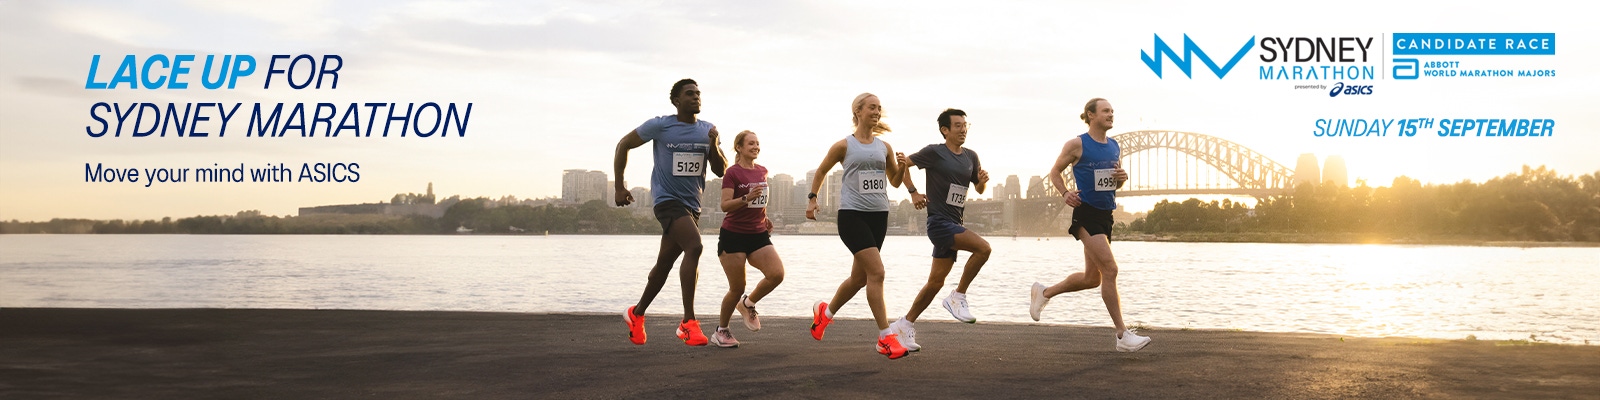 Lace Up For Sydney Marathon. Register Now.